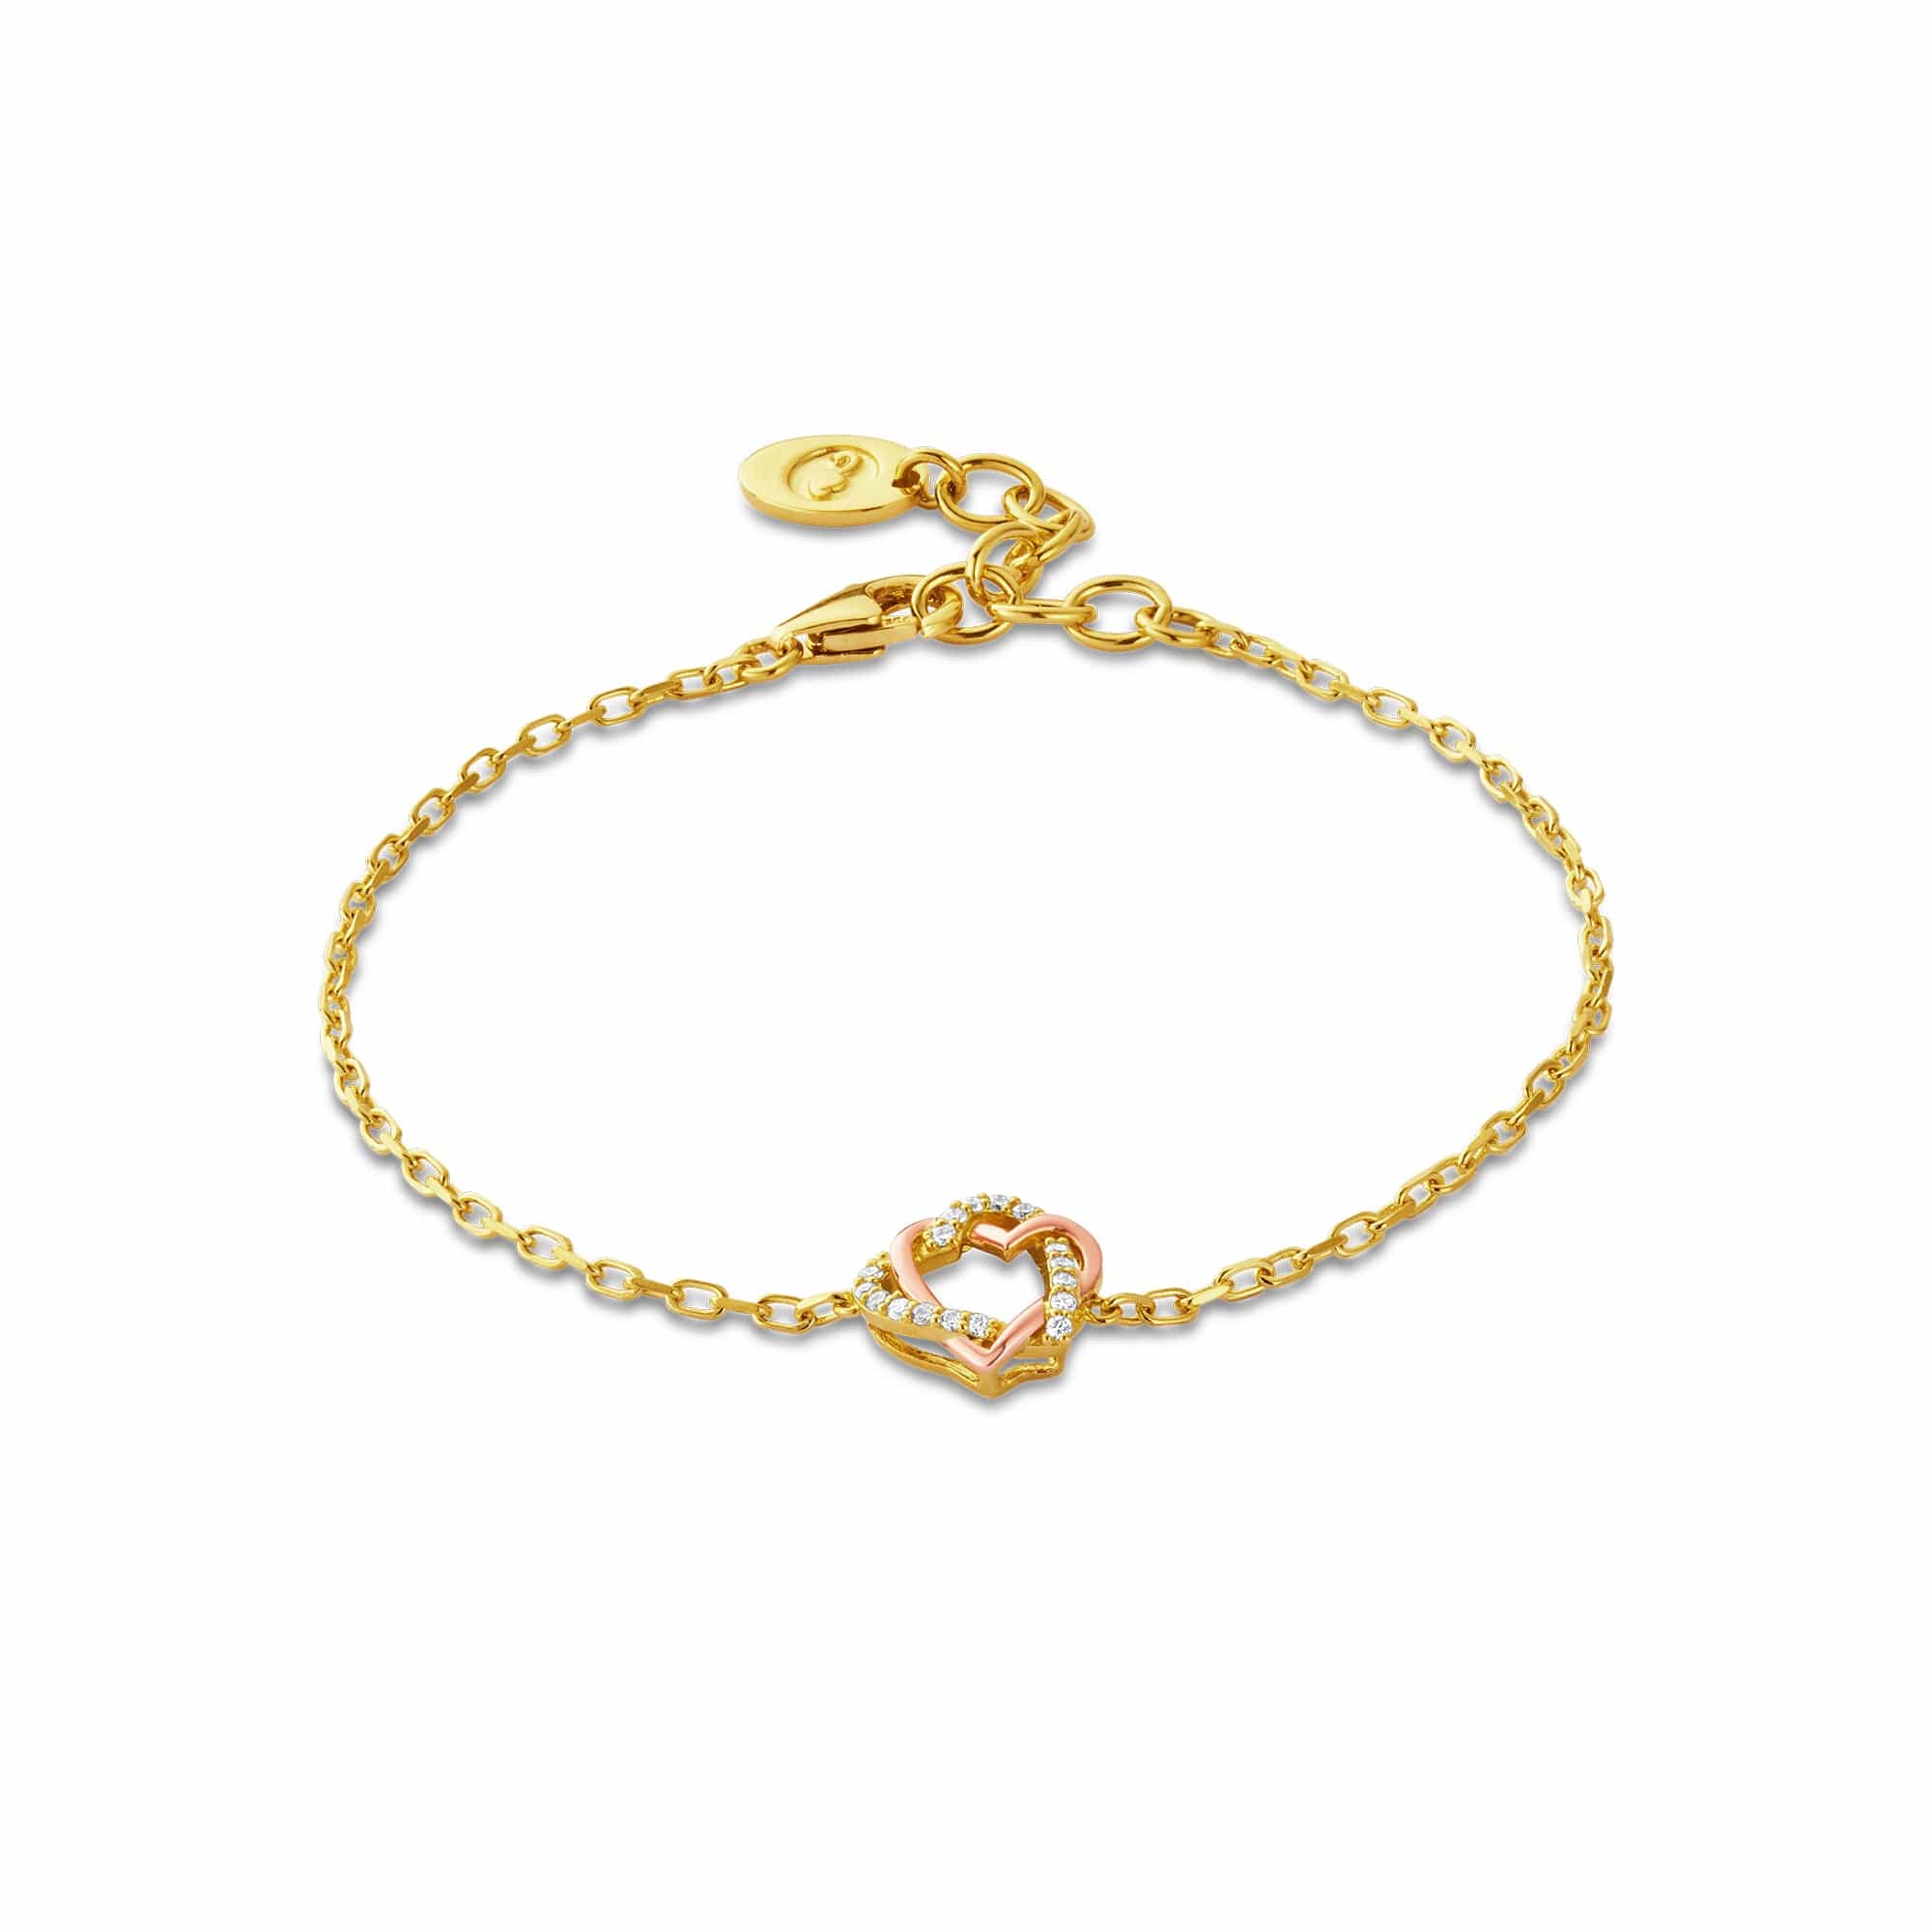 Heart Shaped Bracelet with Gold Plating - Gift for Girlfriend - Valentine  Day Gift - Lovebeat Bracelet by Blingvine